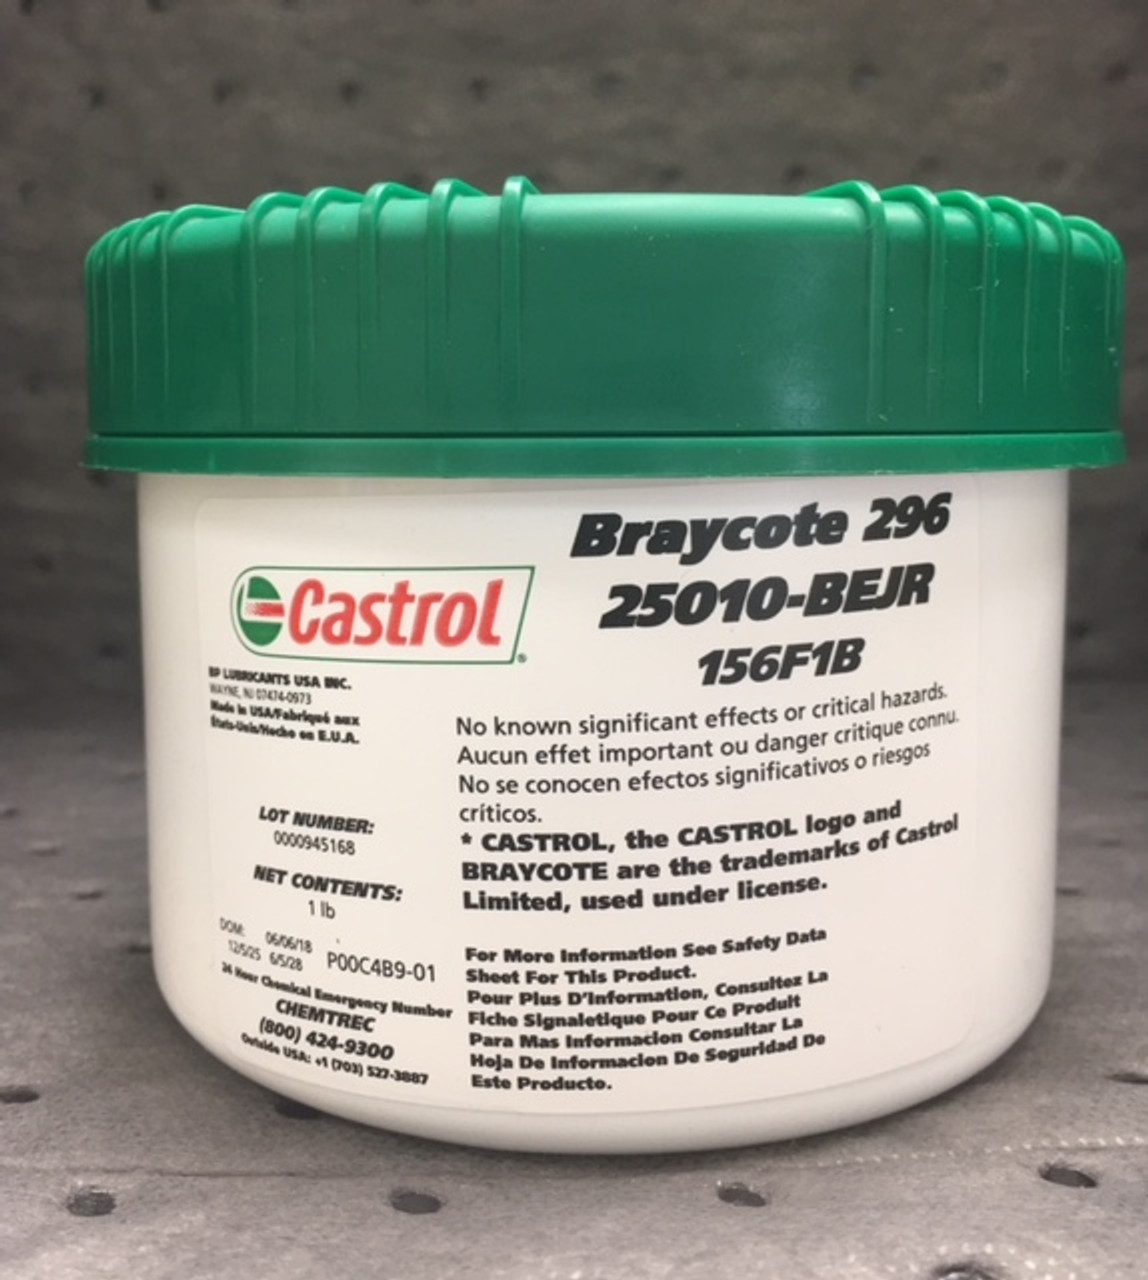 Castrol Braycote 296 - Sub-Micronic, Extreme Low Volatility Grease. 1 lb. jar (25010BEJR 156F1B)